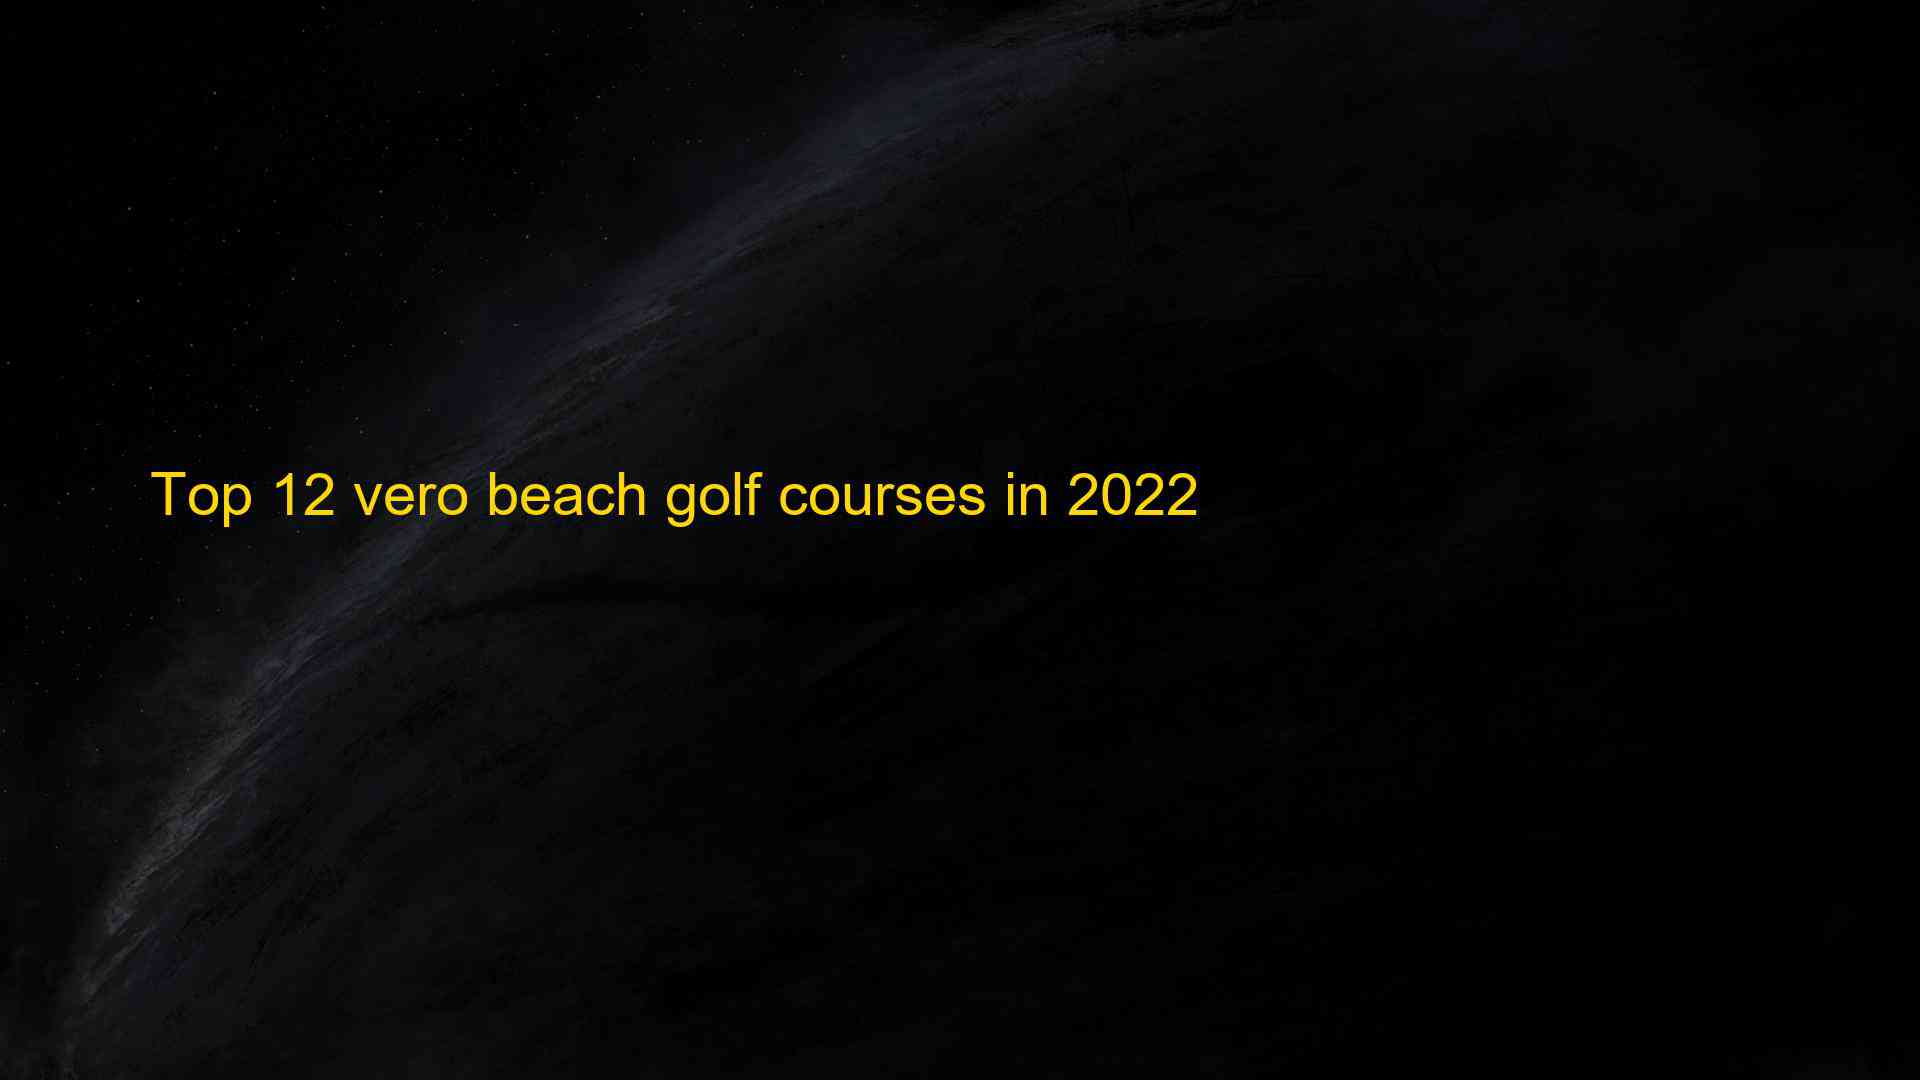 Top 12 vero beach golf courses in 2022 1660971101